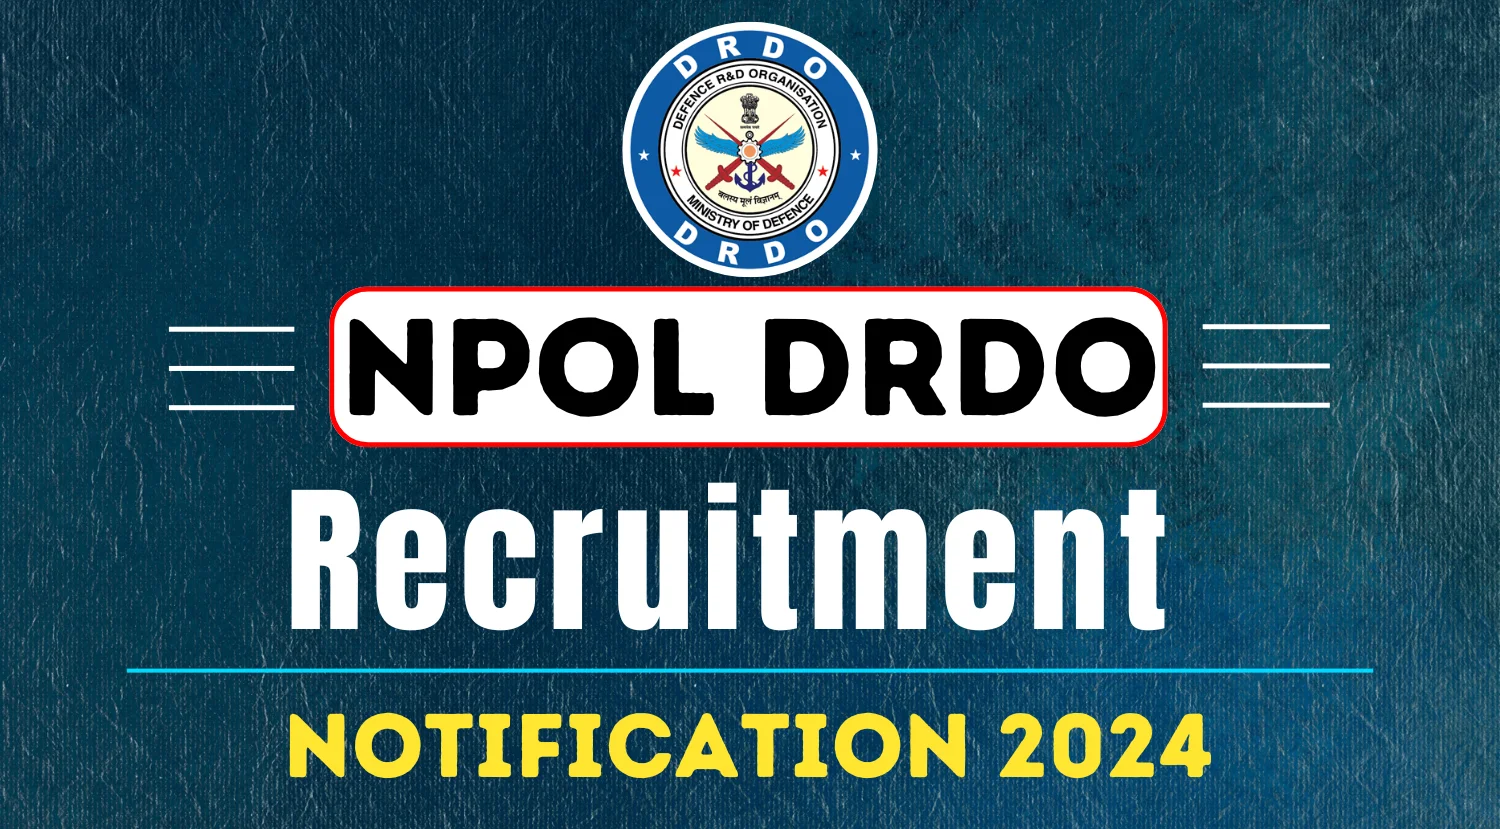 NPOL DRDO Recruitment 2024 Notification for Various Vacancies